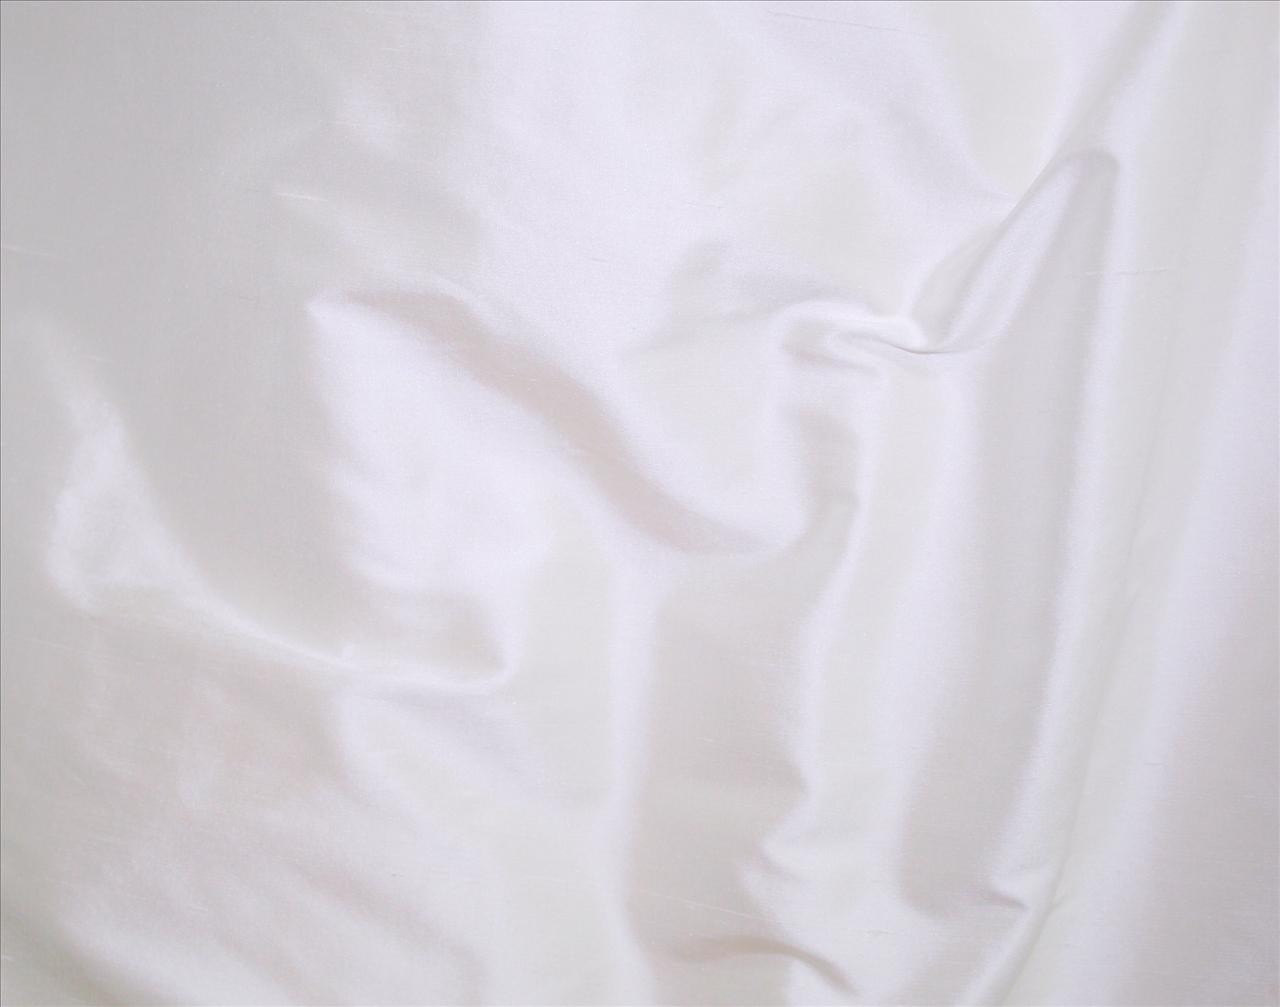 White Silk Fabrics Backgrounds